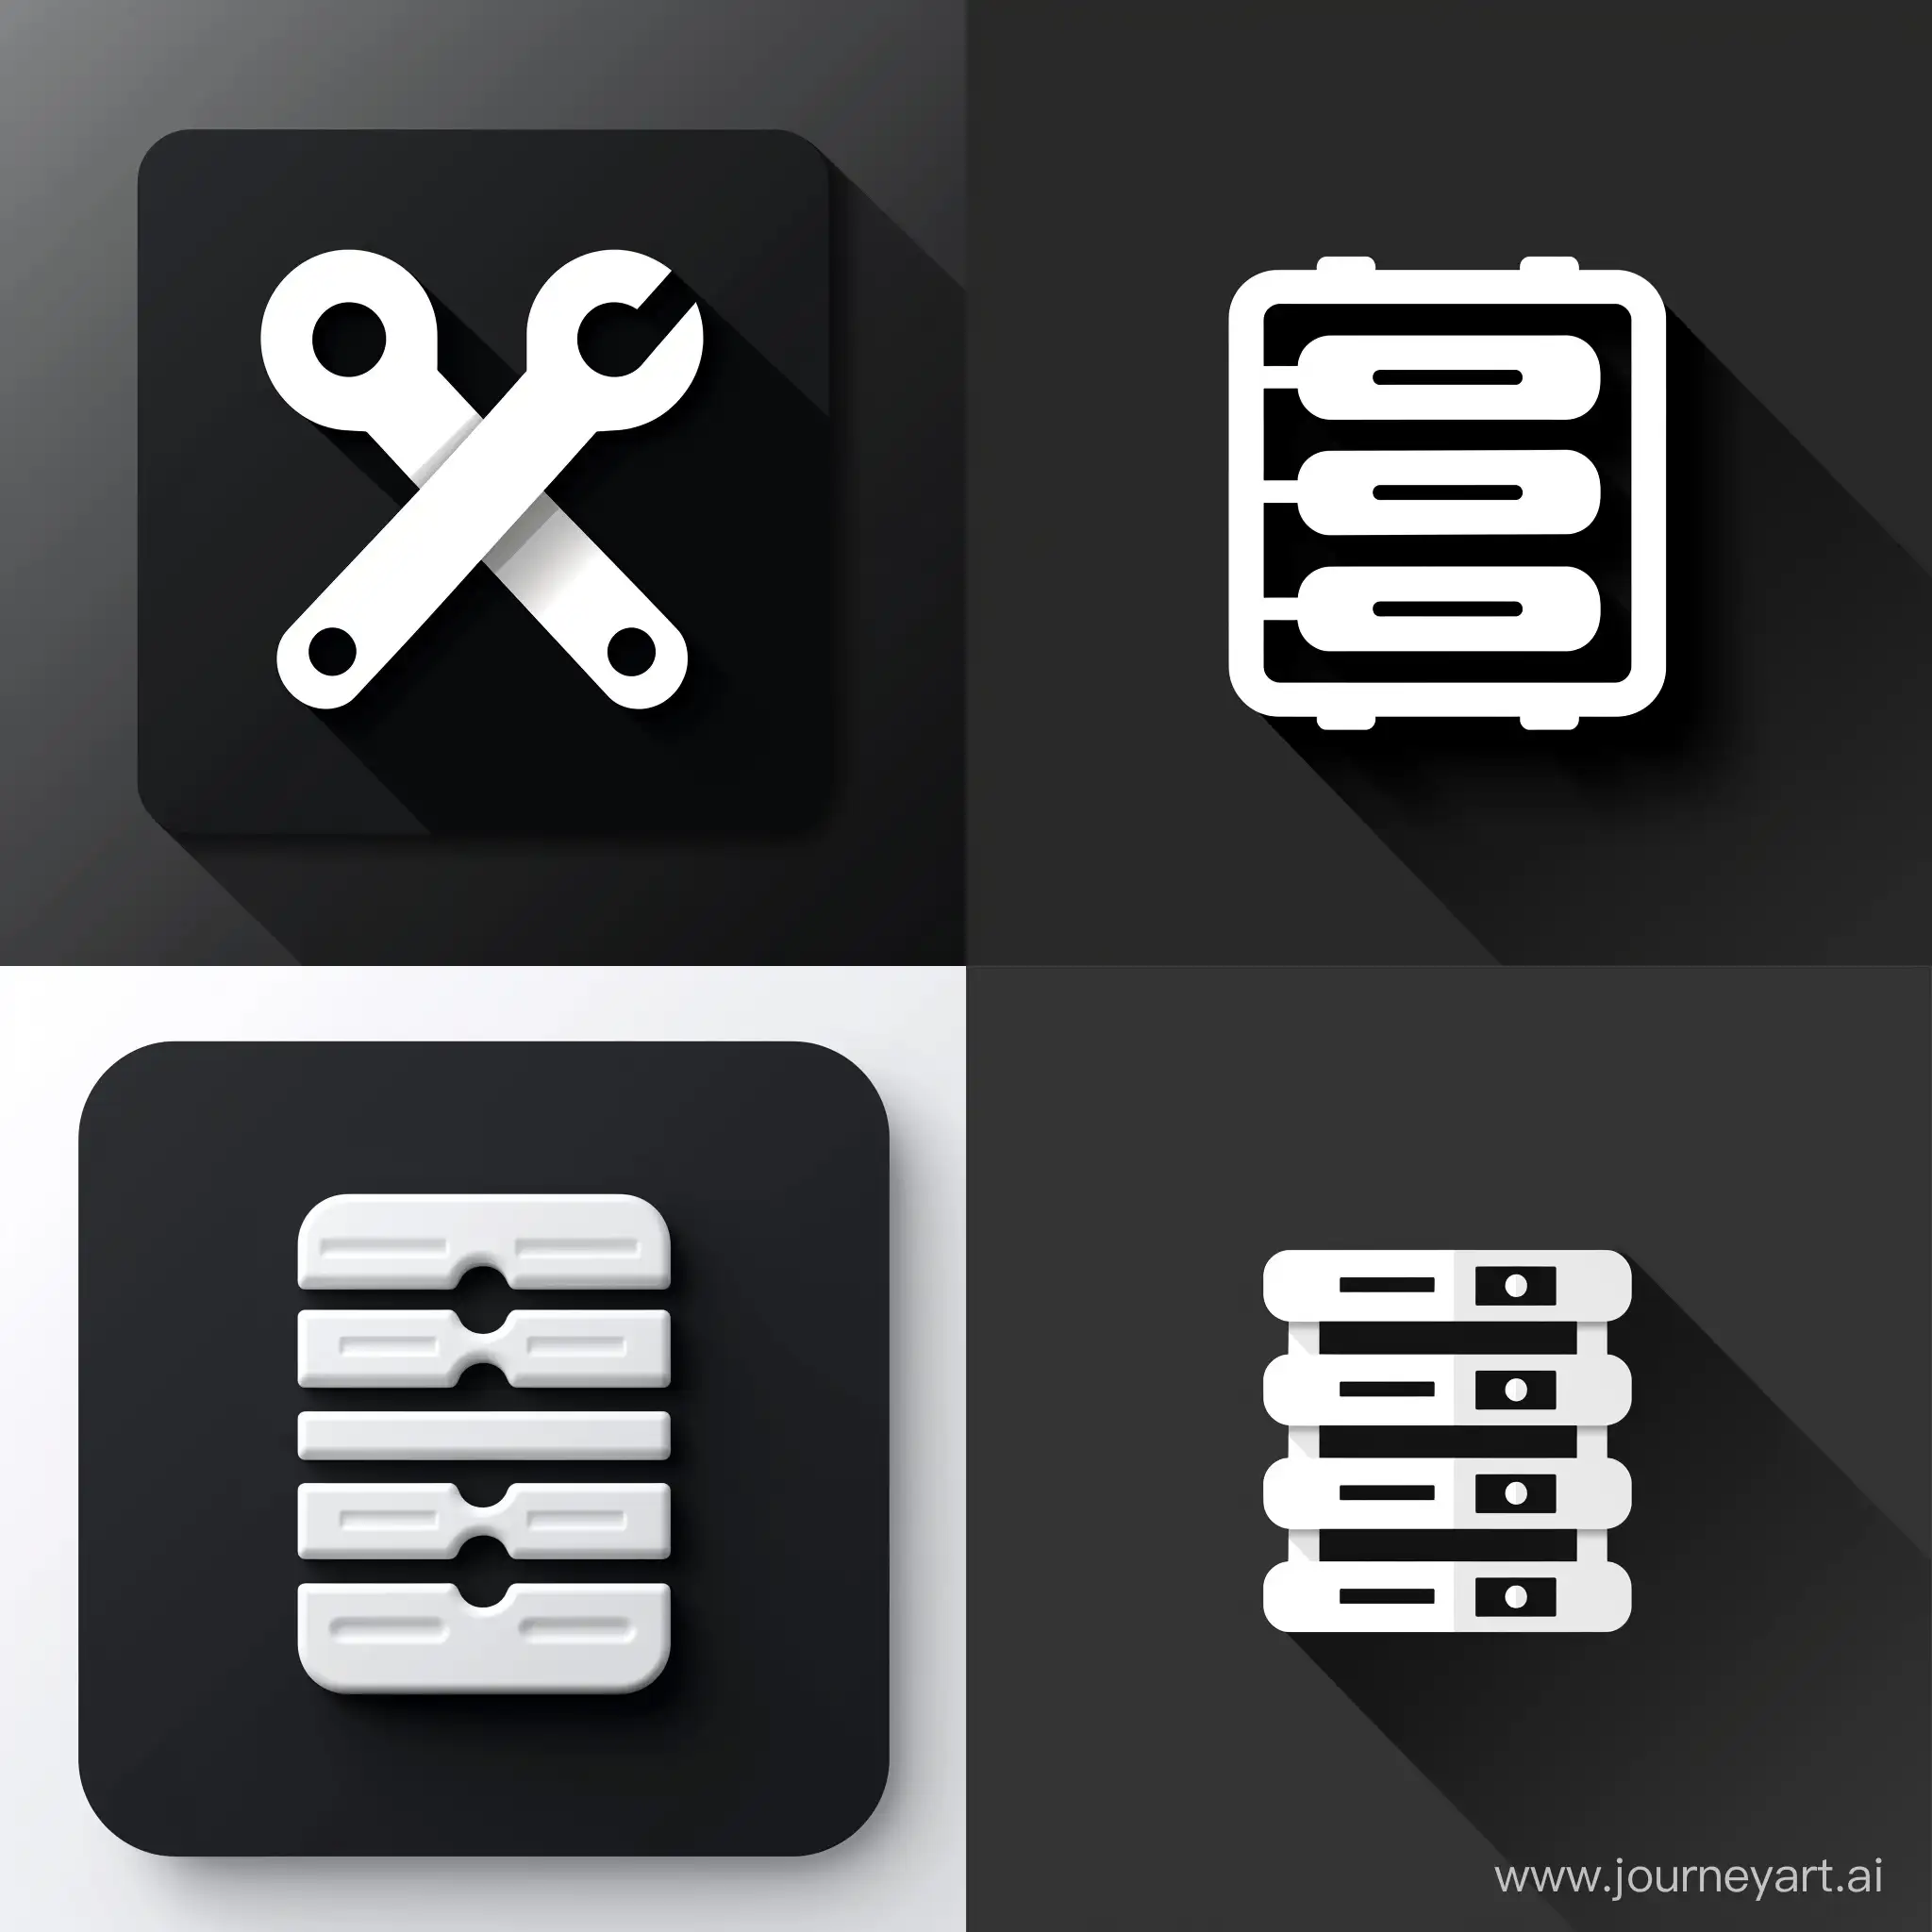 Sleek-White-Server-Maintenance-Icon-on-Black-Background